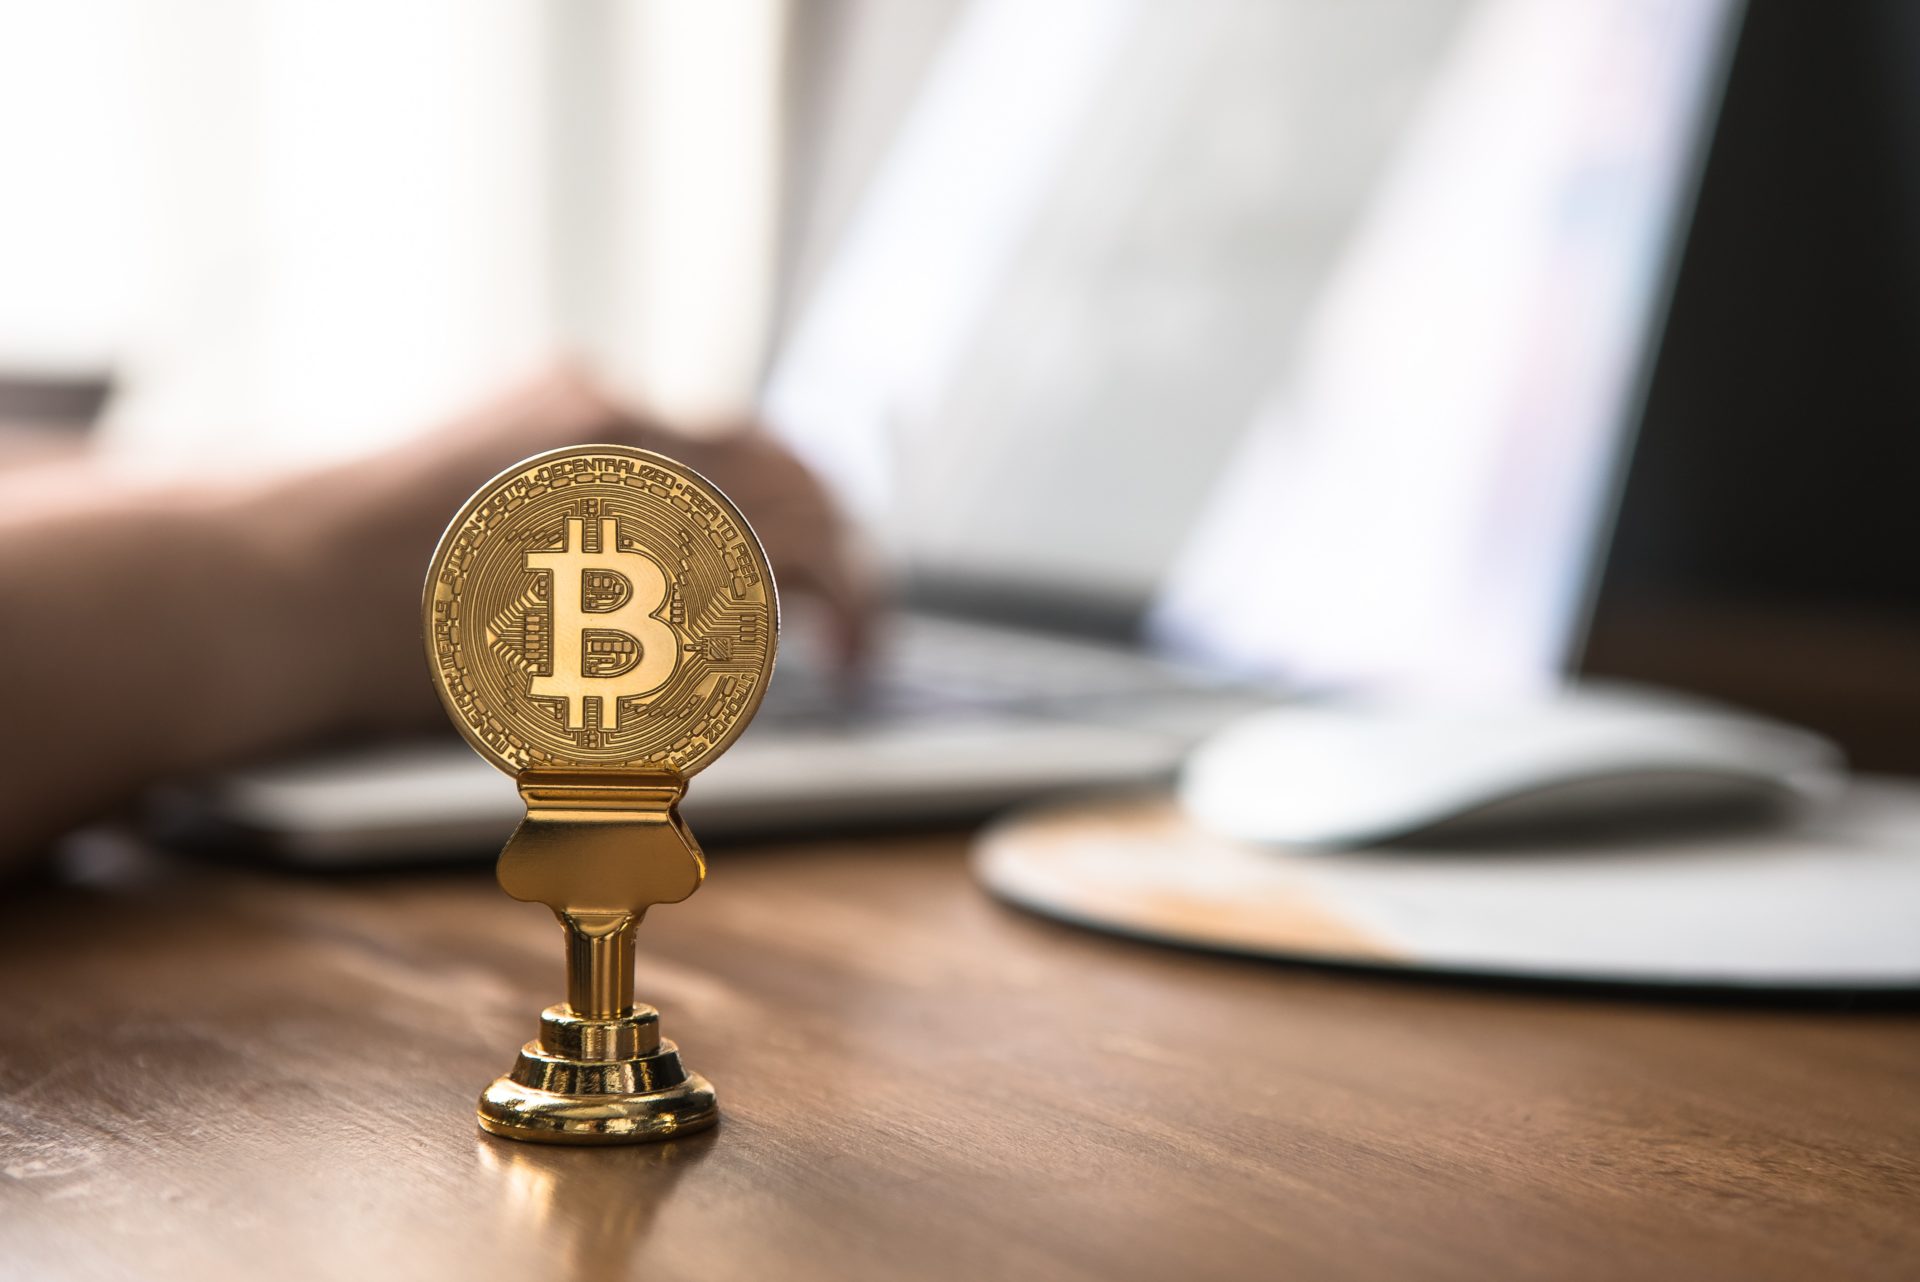  bitcoin crypto analysts bearish range-bound remains chance 